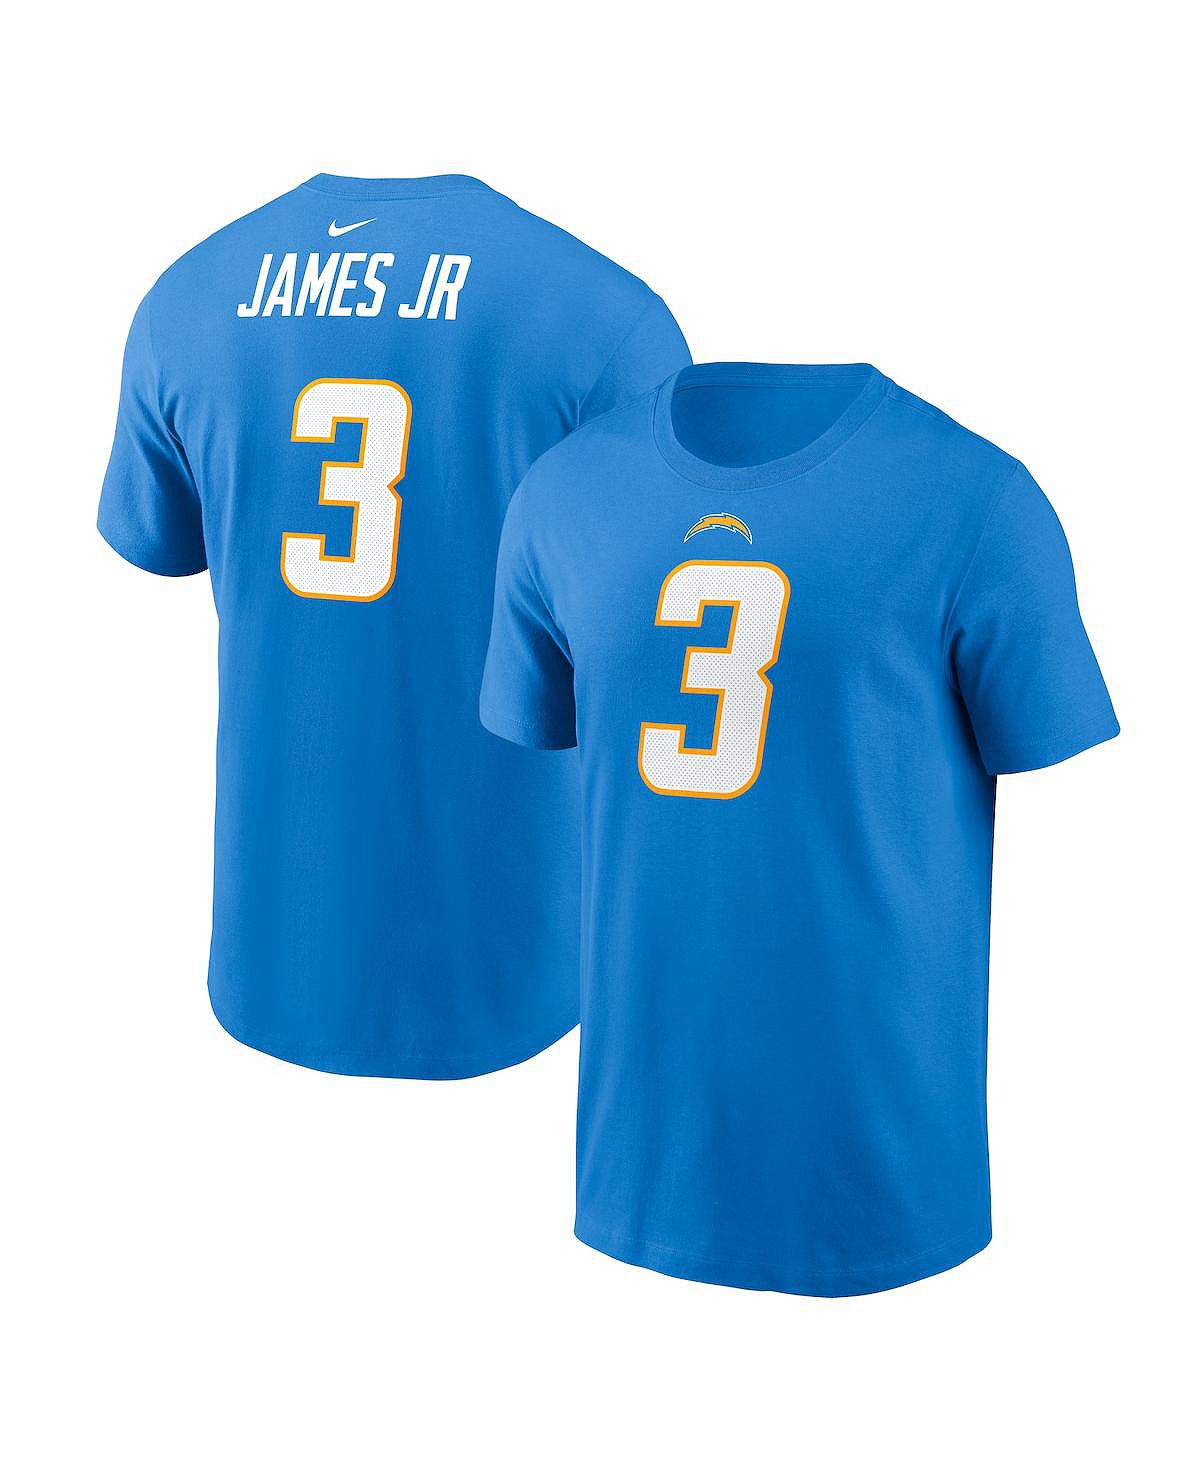 Мужская футболка derwin james jr. powder blue los angeles chargers с именем и номером игрока Nike, синий